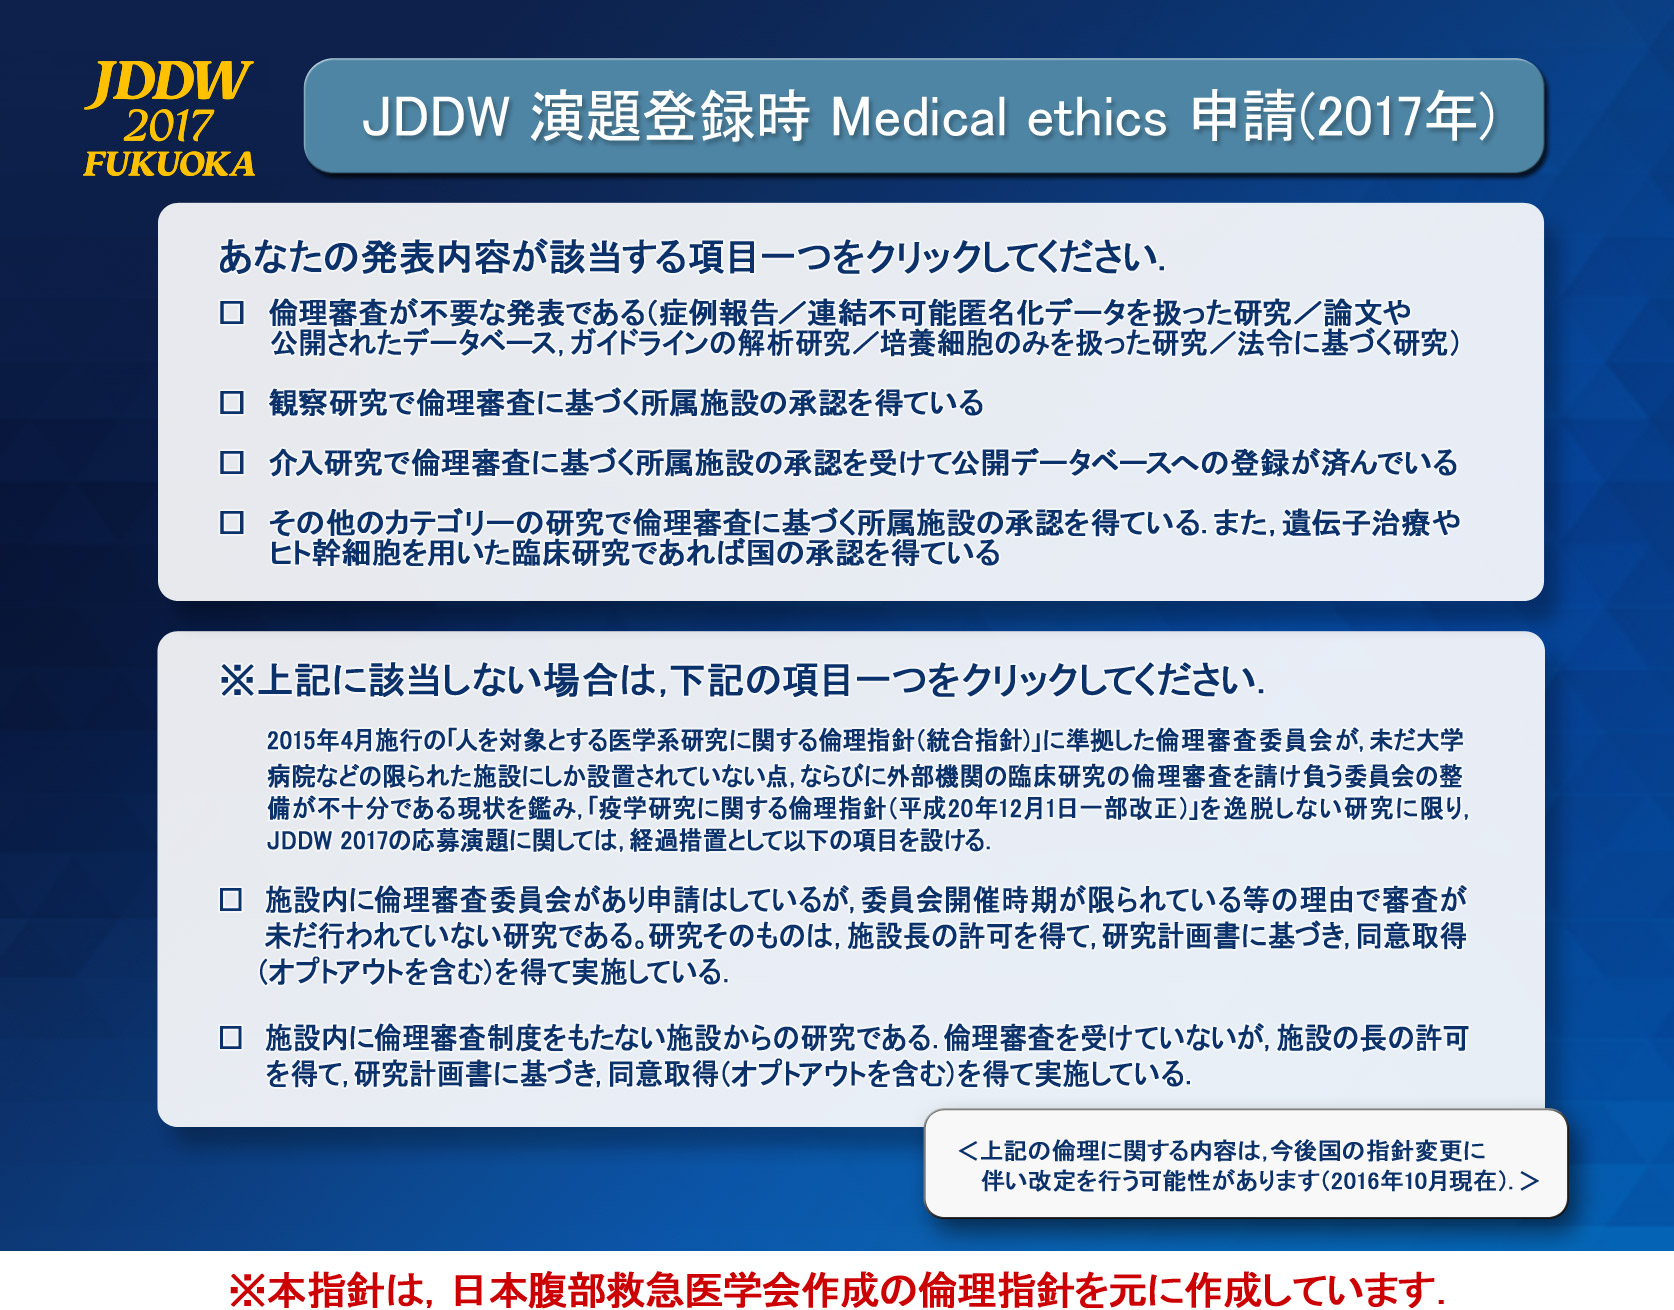 JDDW 演題登録時 Medical ethics 申請（2017年）